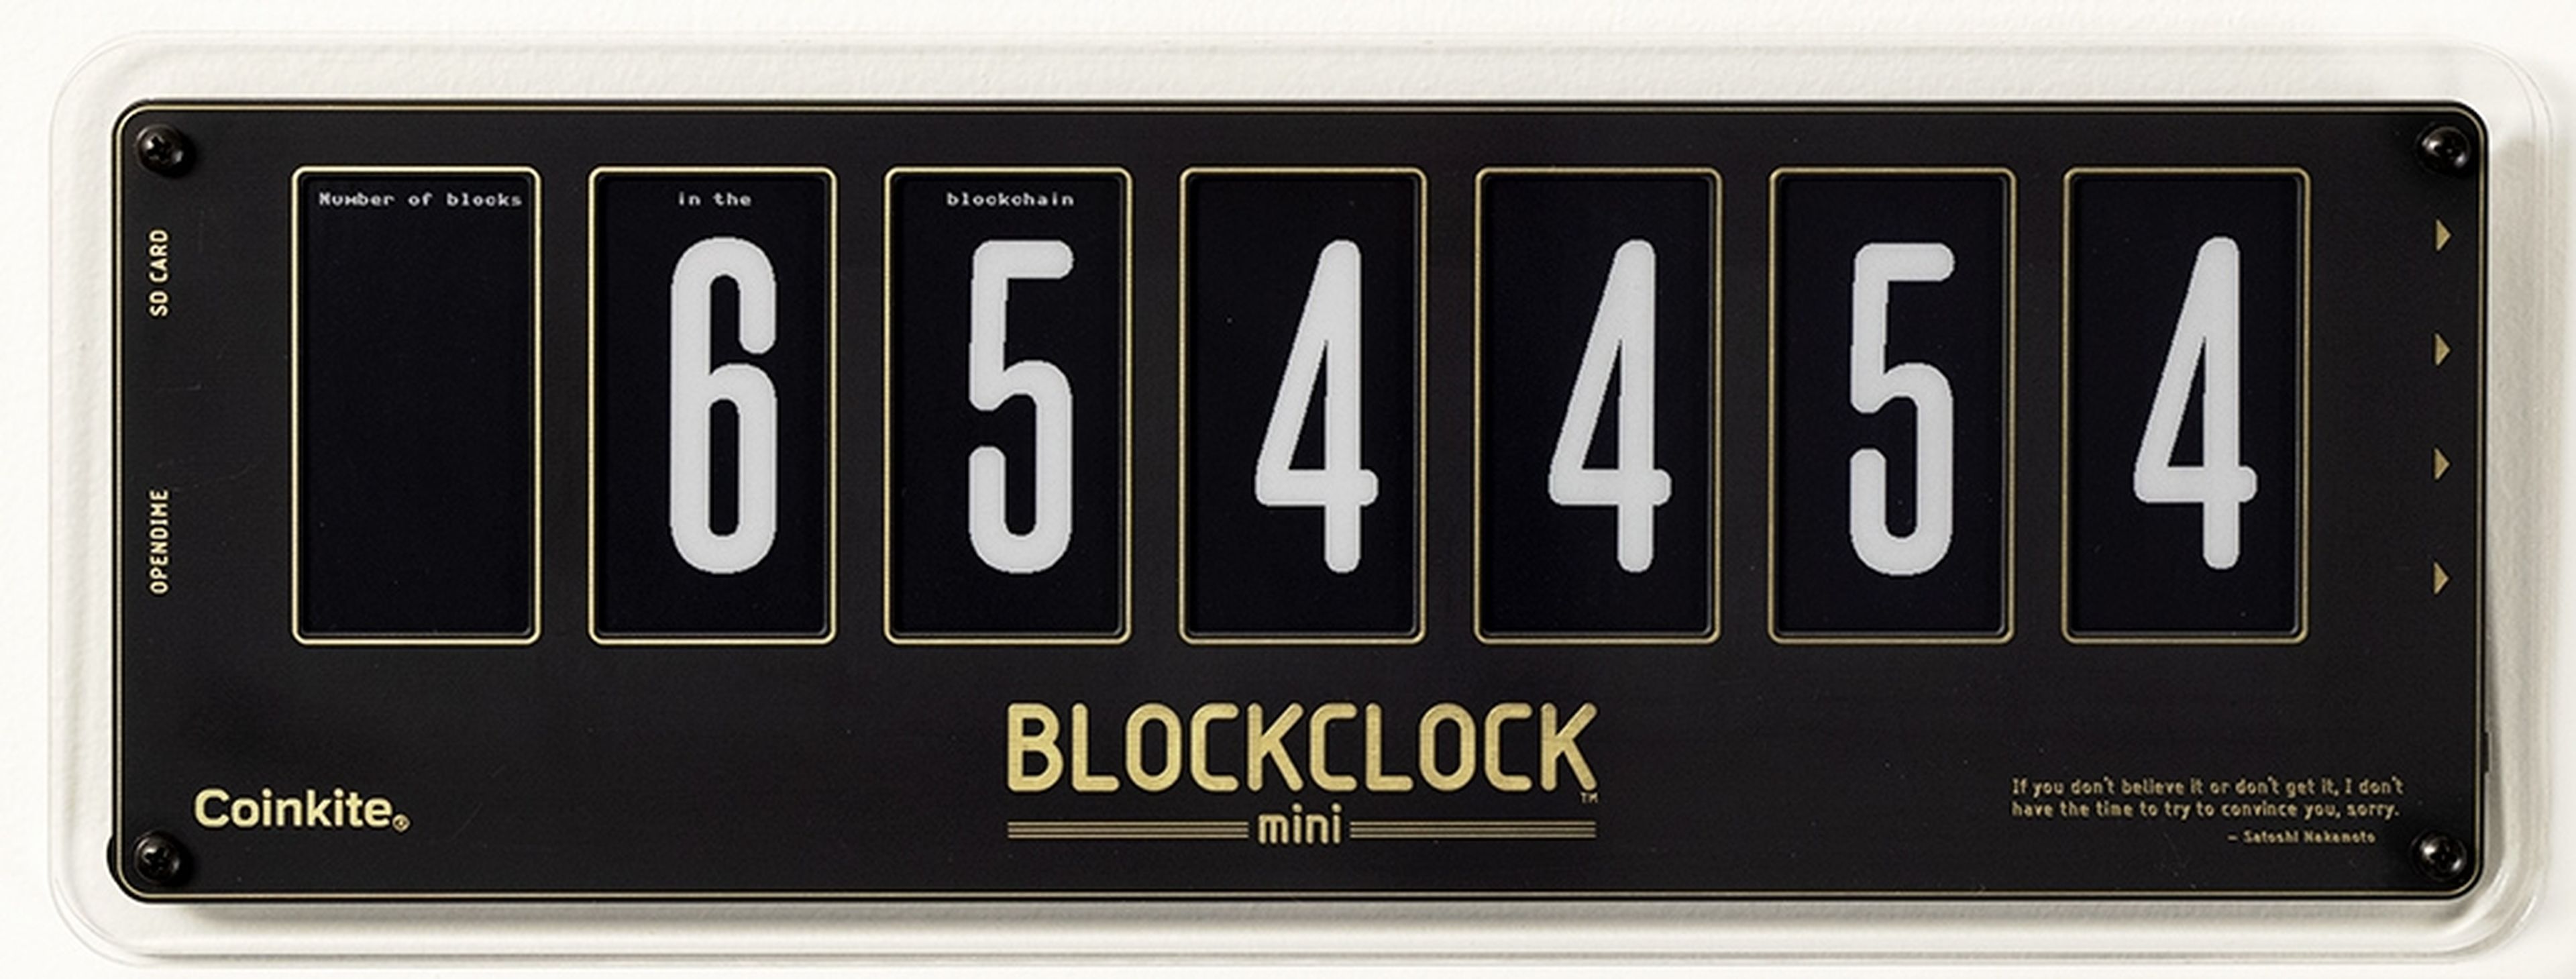 Reloj Bitcoin